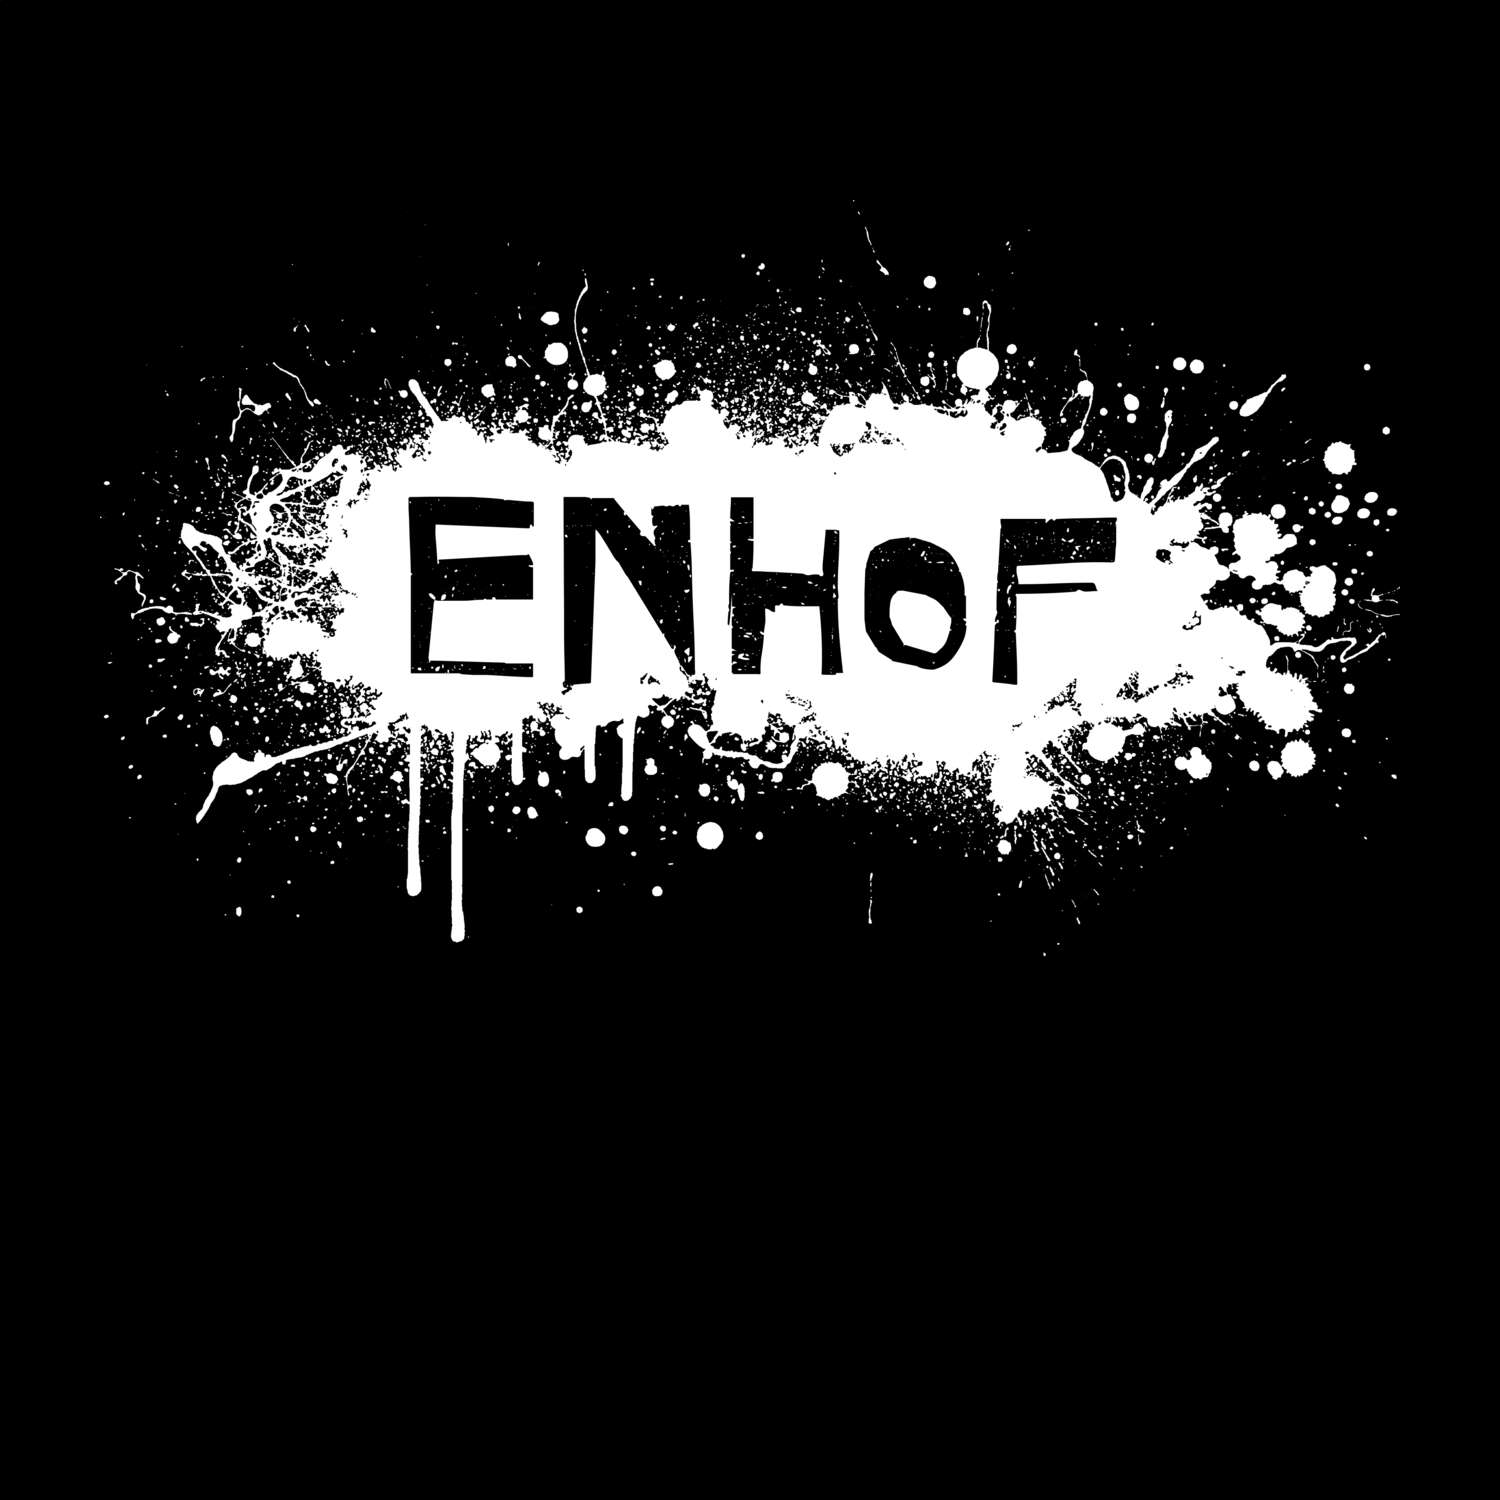 Enhof T-Shirt »Paint Splash Punk«